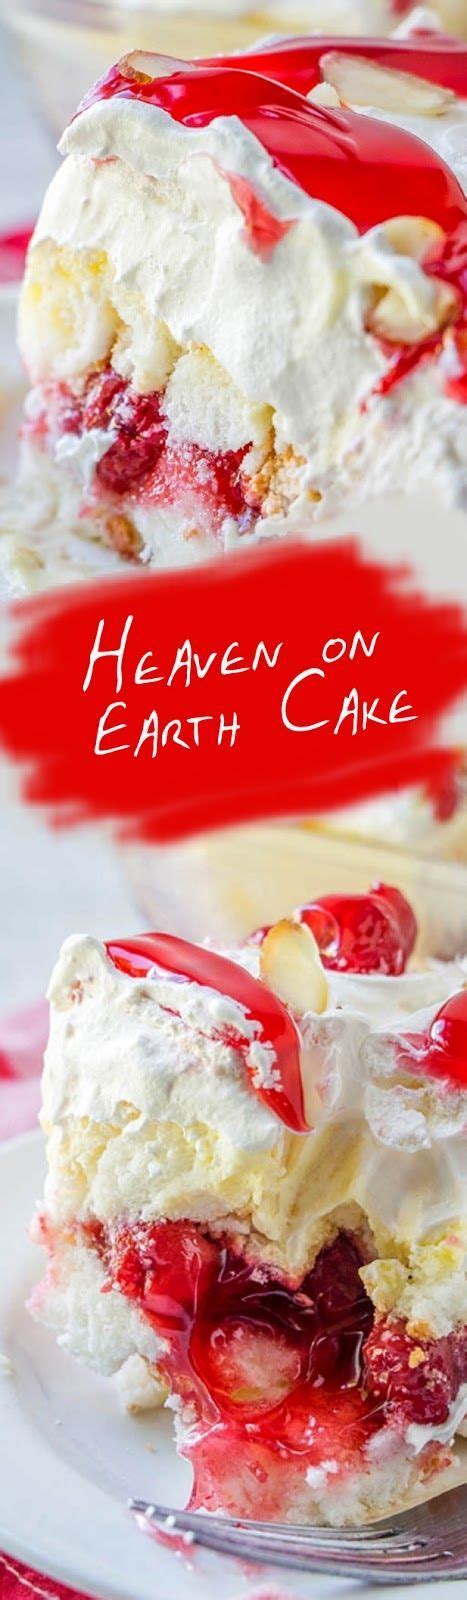 1 box angel food cake or 1 prepared angel food cake; Perfect Heaven on Earth Cake | Cake recipes, Earth cake ...